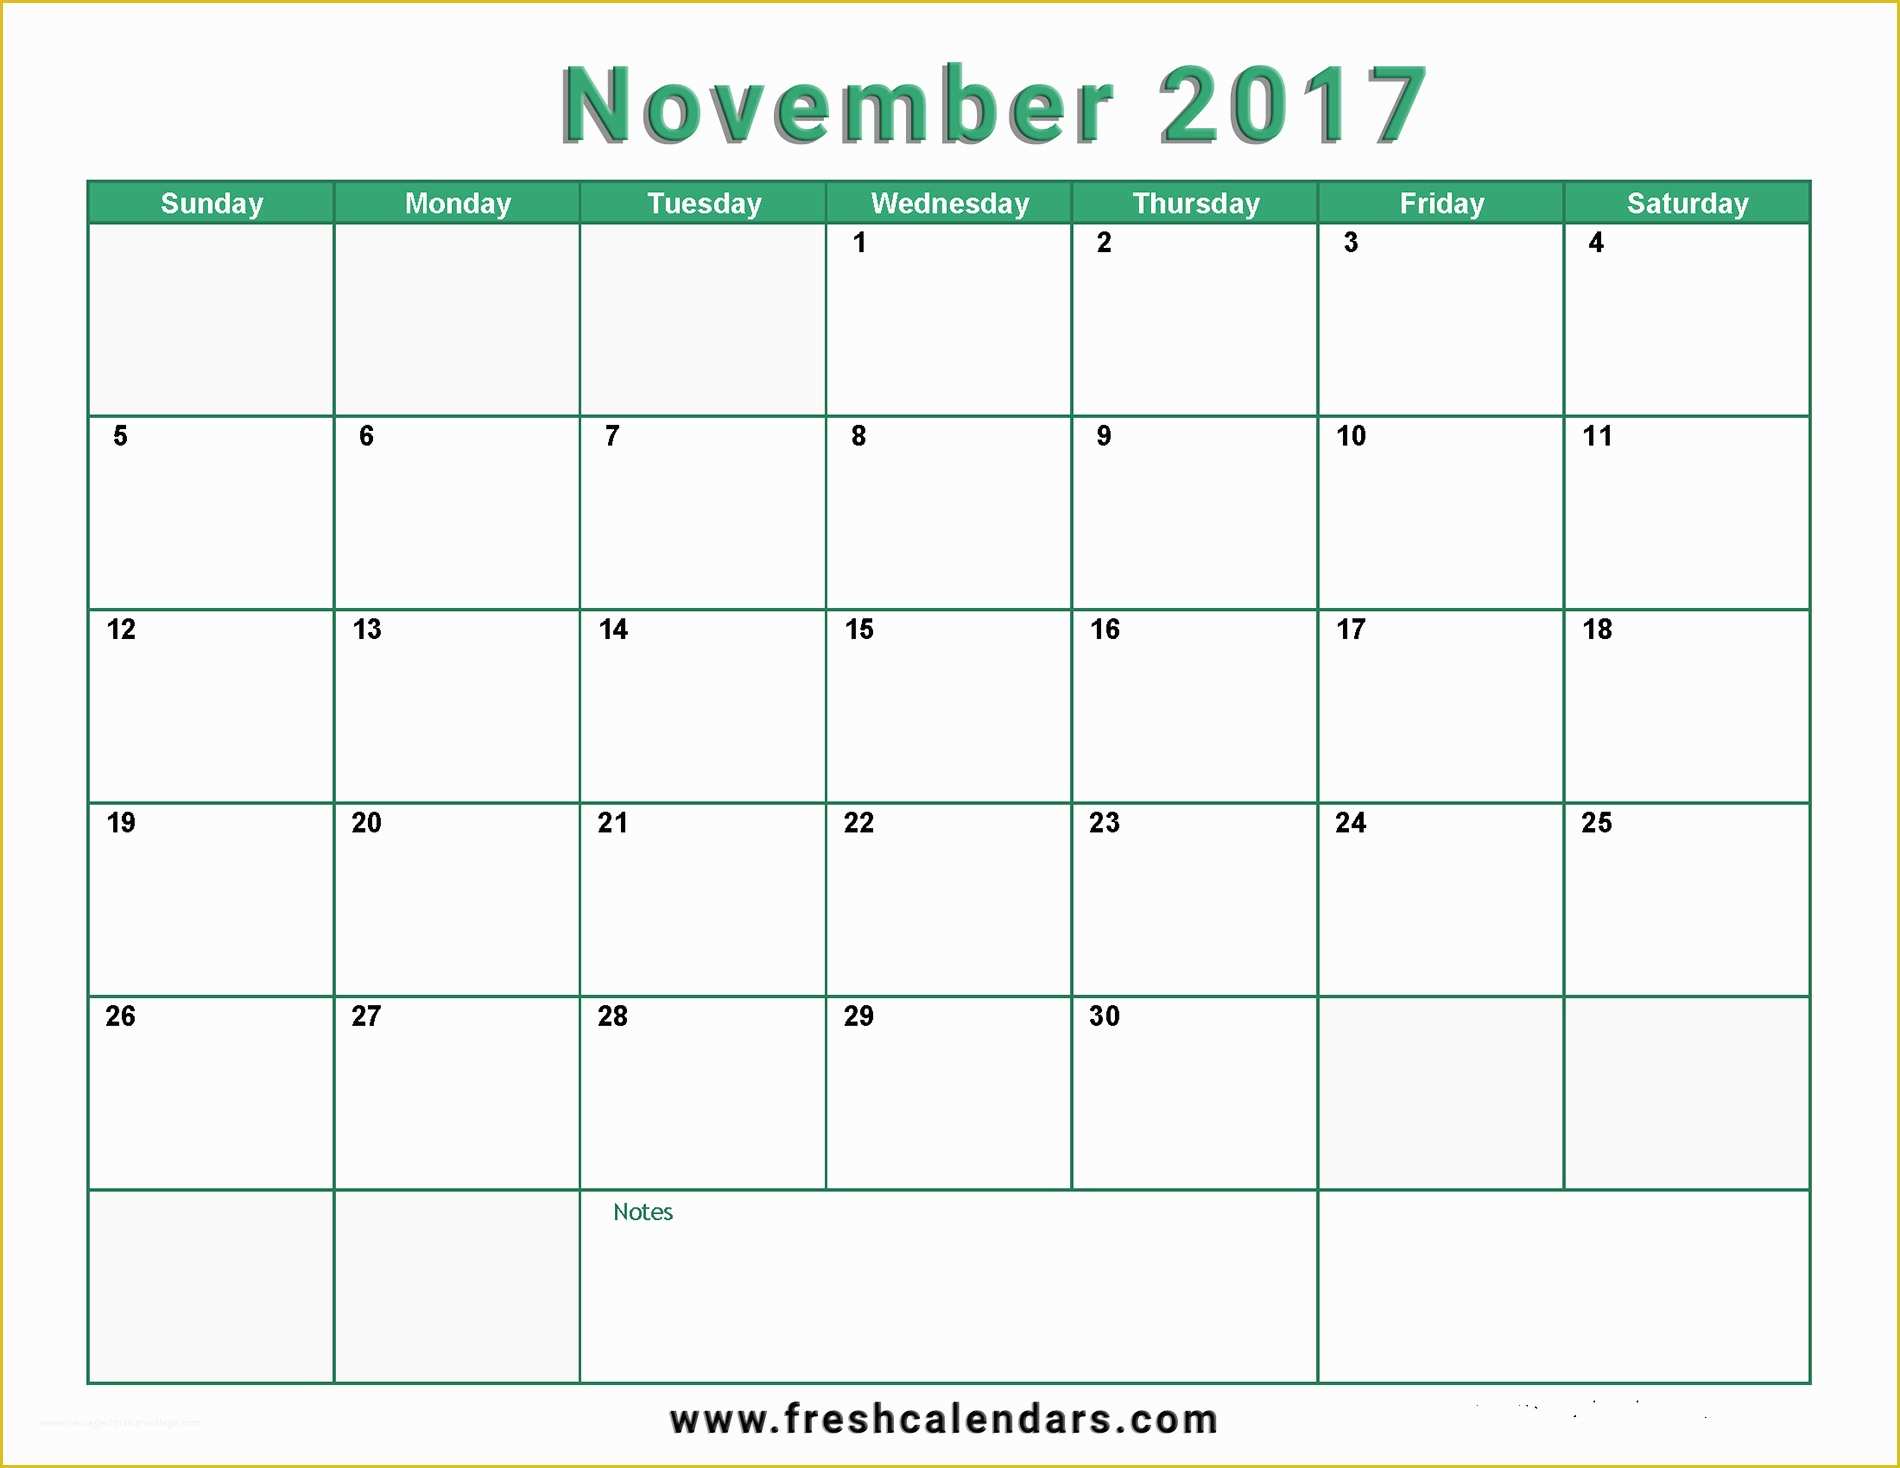 Free Calendar Template 2017 November Of Best Free Customizable Printable Calendar